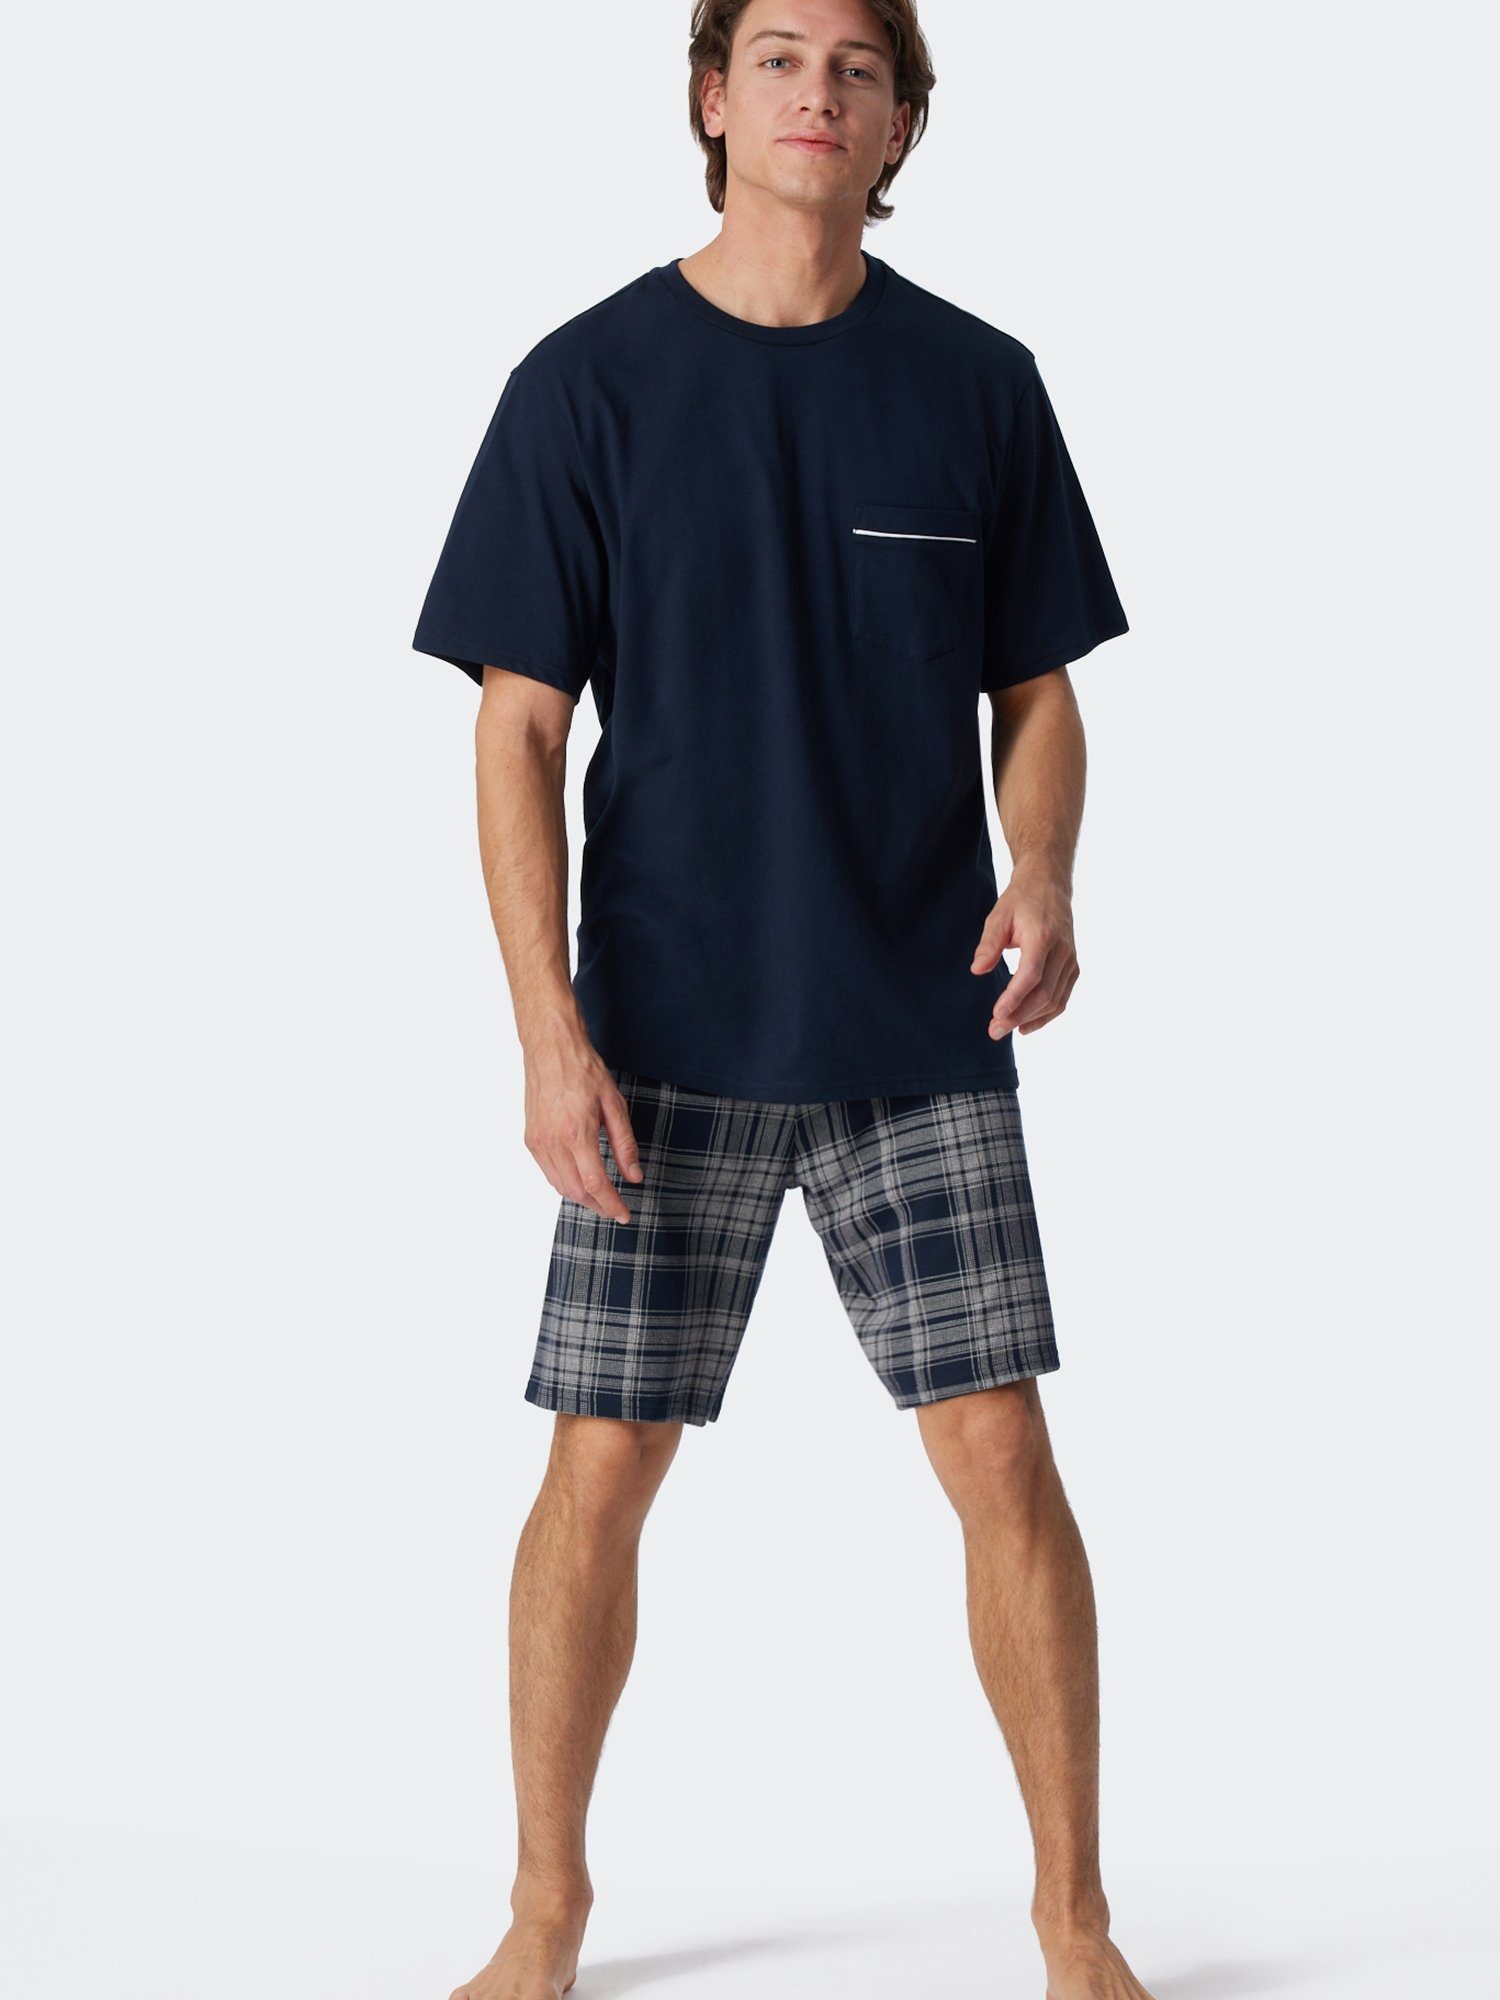 Schiesser Pyjama Comfort Fit dunkelblau